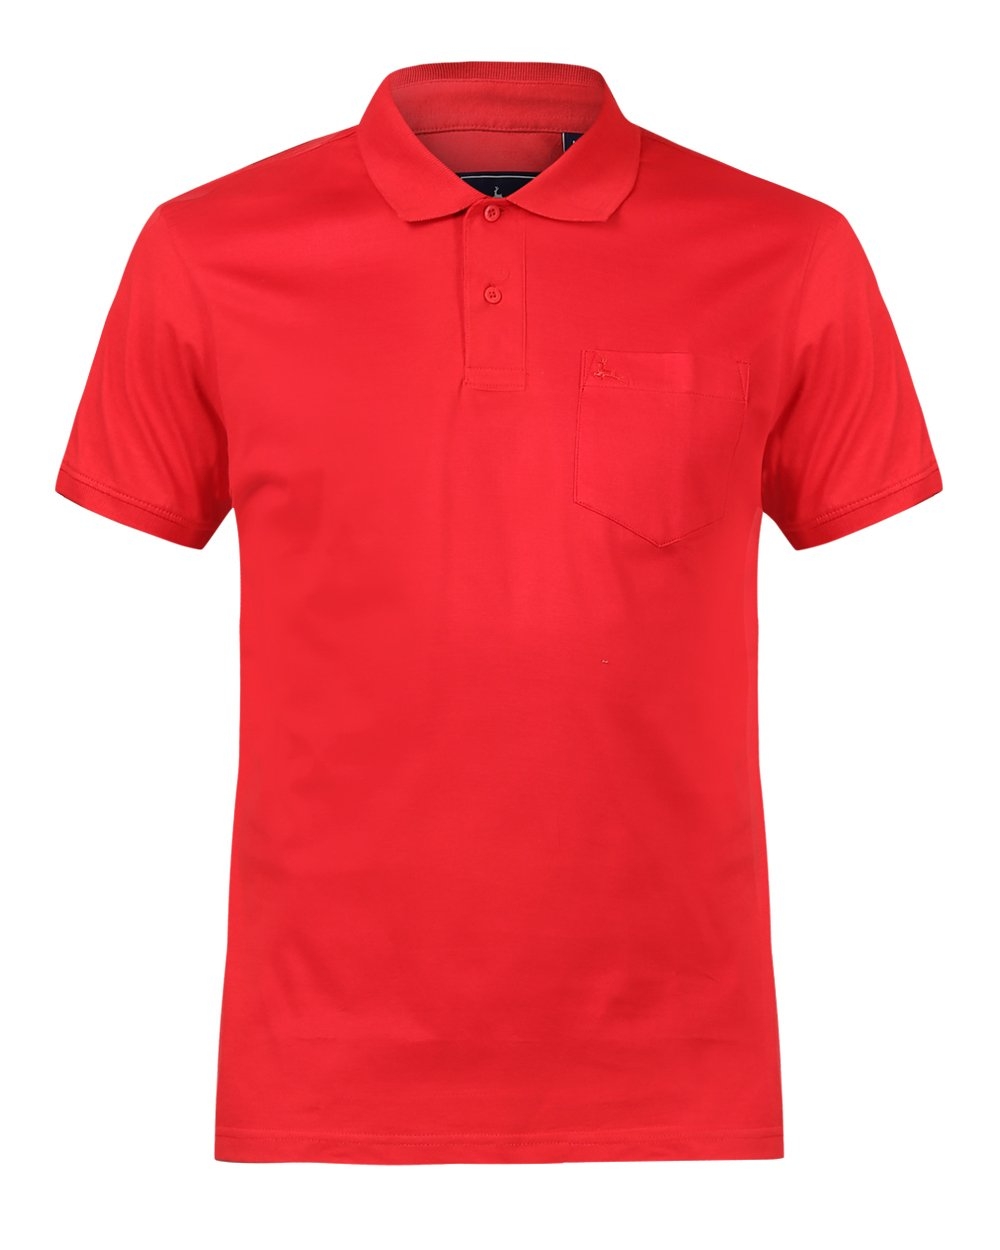 Parx Medium Red T-Shirt